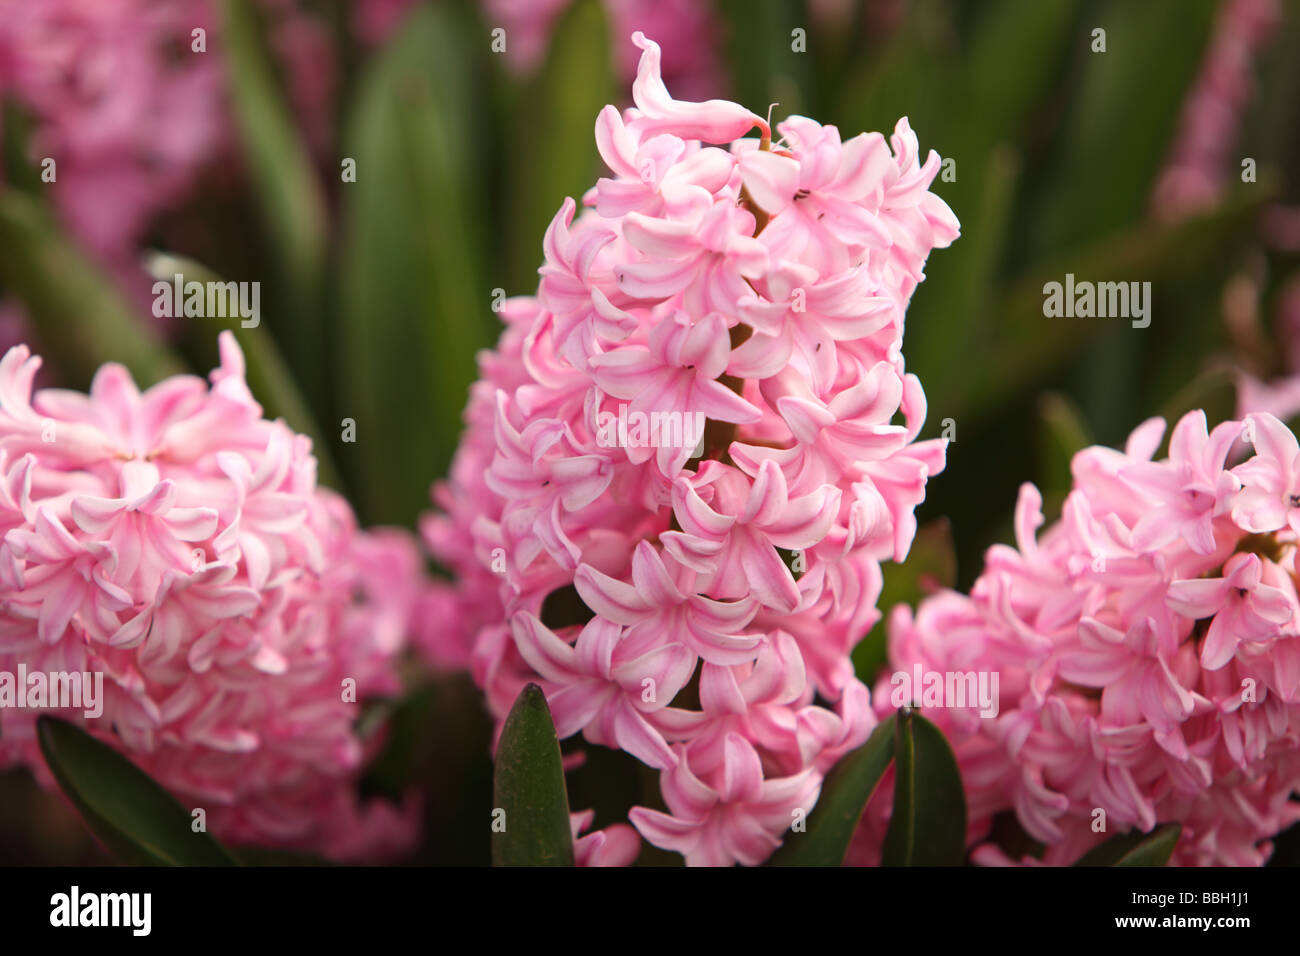 Rosa Hyazinthe Blüten Nahaufnahme Stockfoto